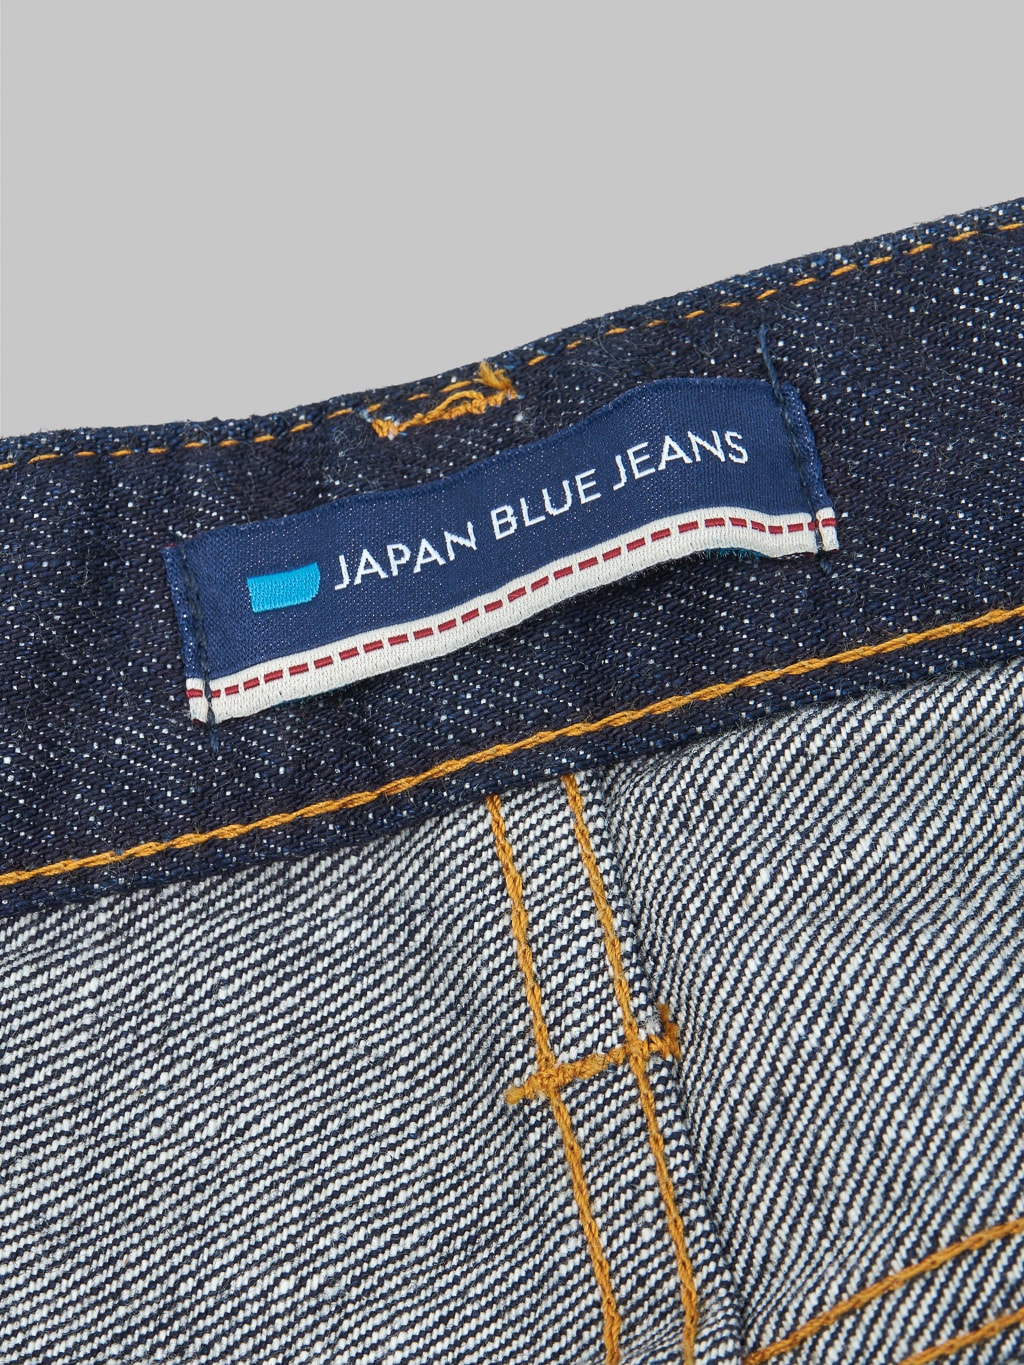 Japan Blue J301 US Cotton Circle Straight Jeans interior tag